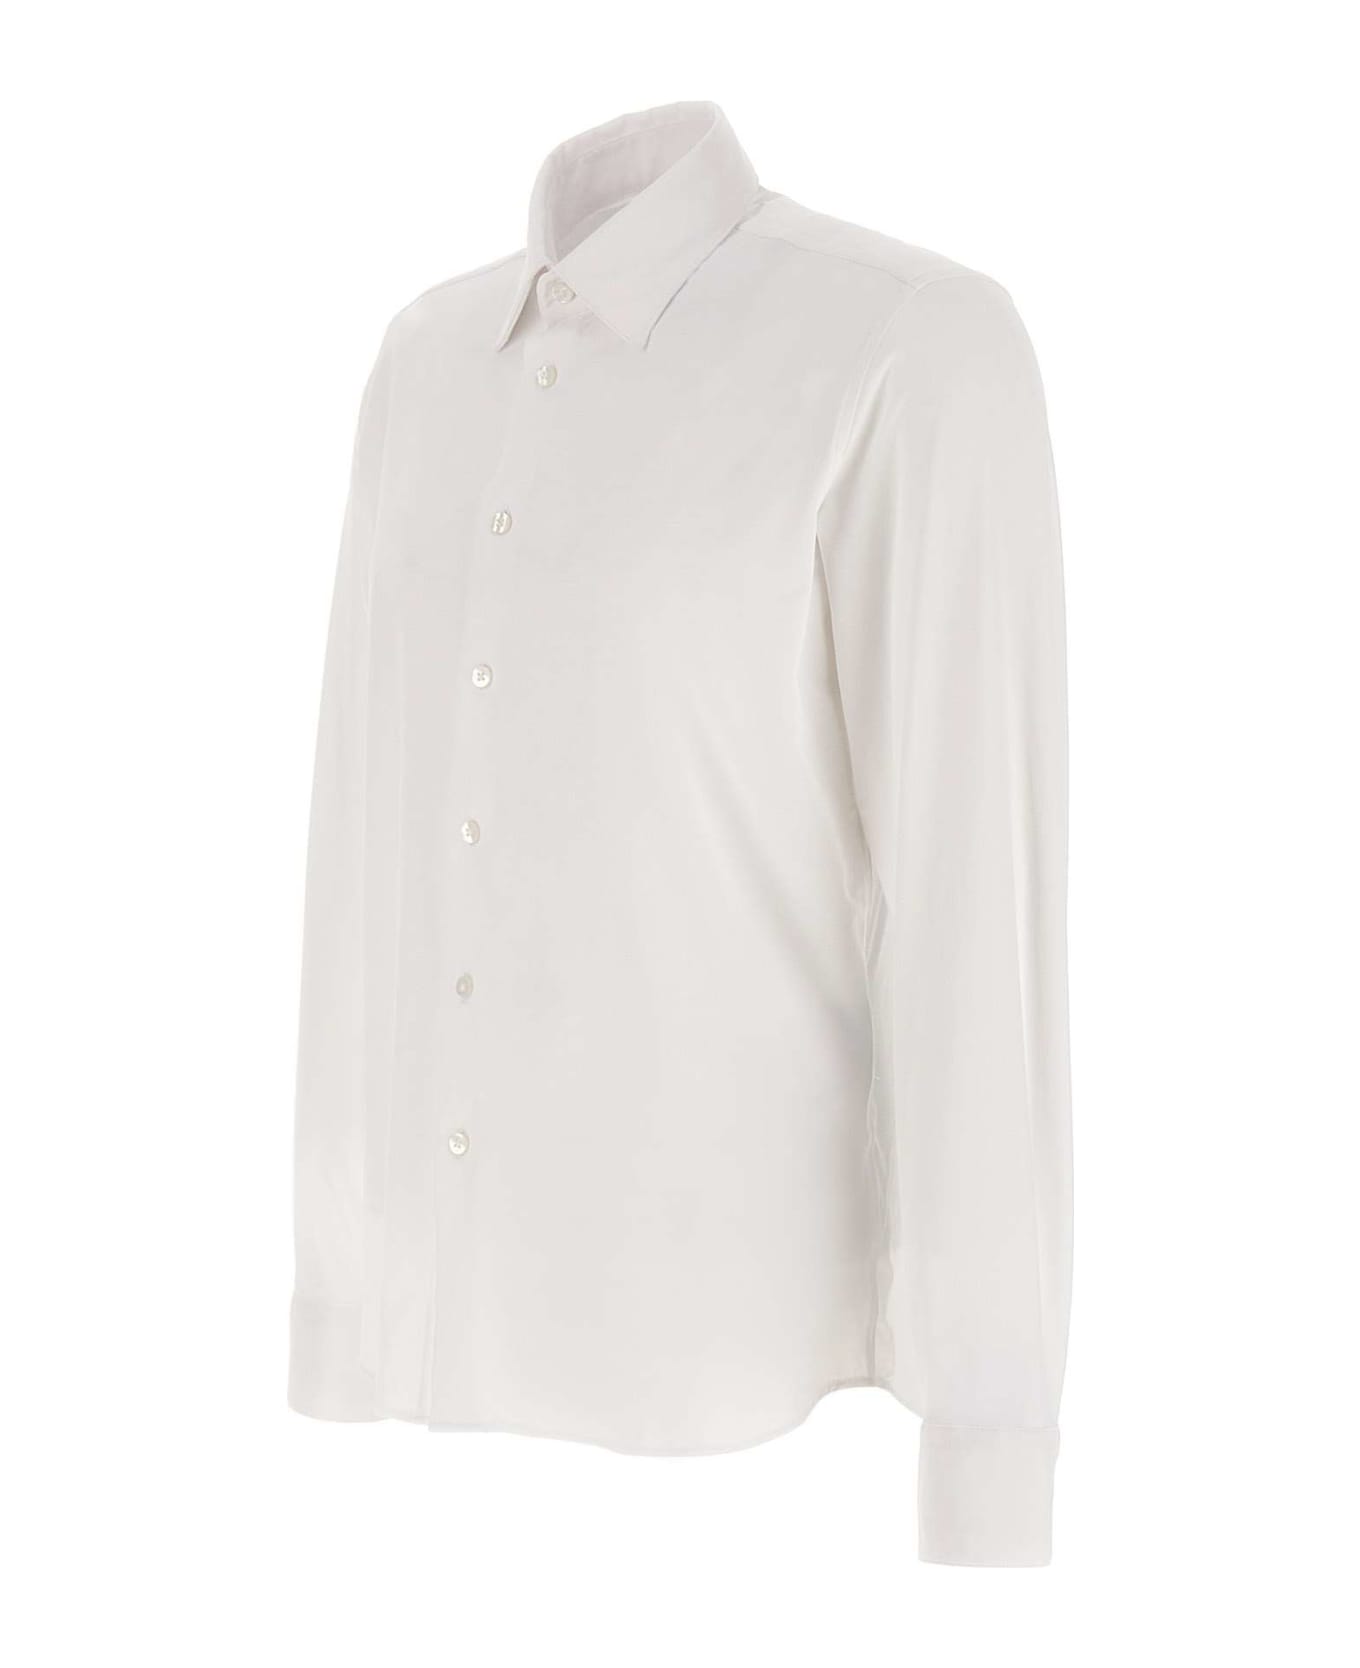 RRD - Roberto Ricci Design 'oxford' Shirt - Bianco